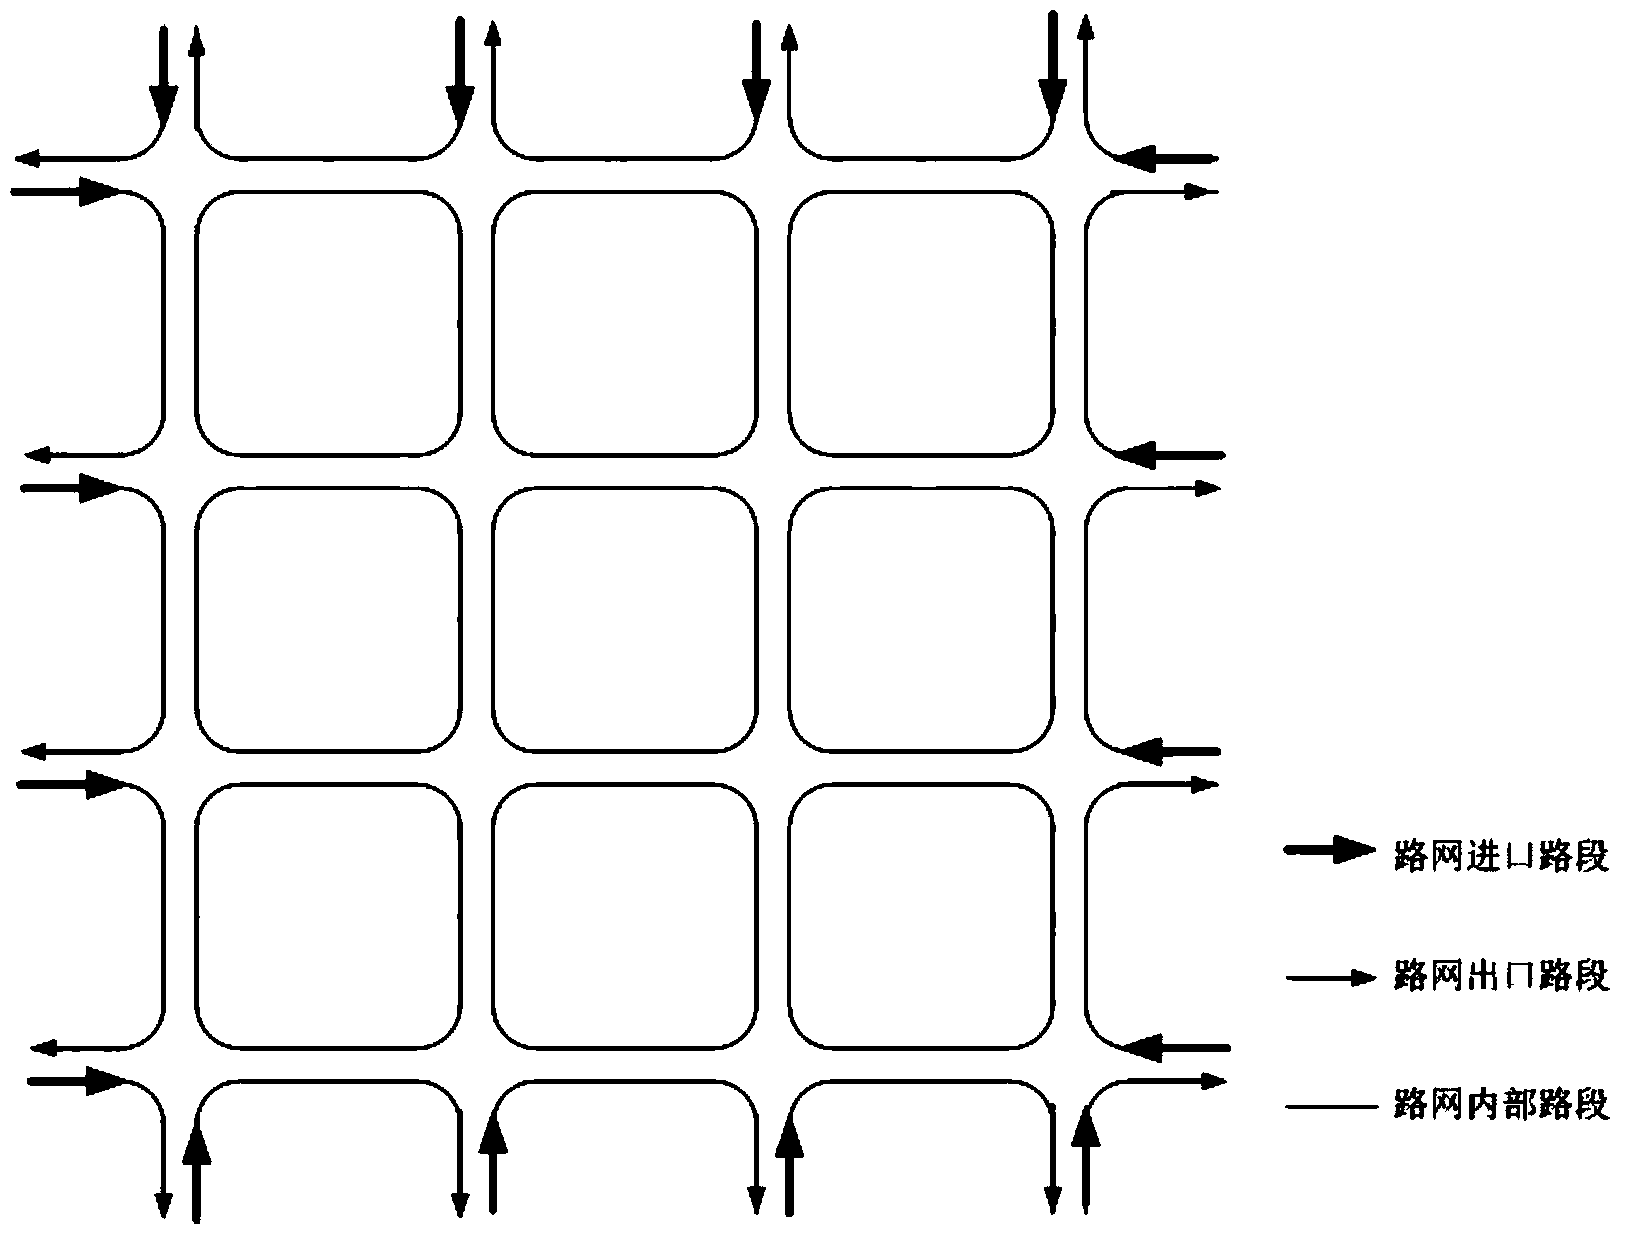 Method for arranging network traffic flow detectors based on road network topological relation